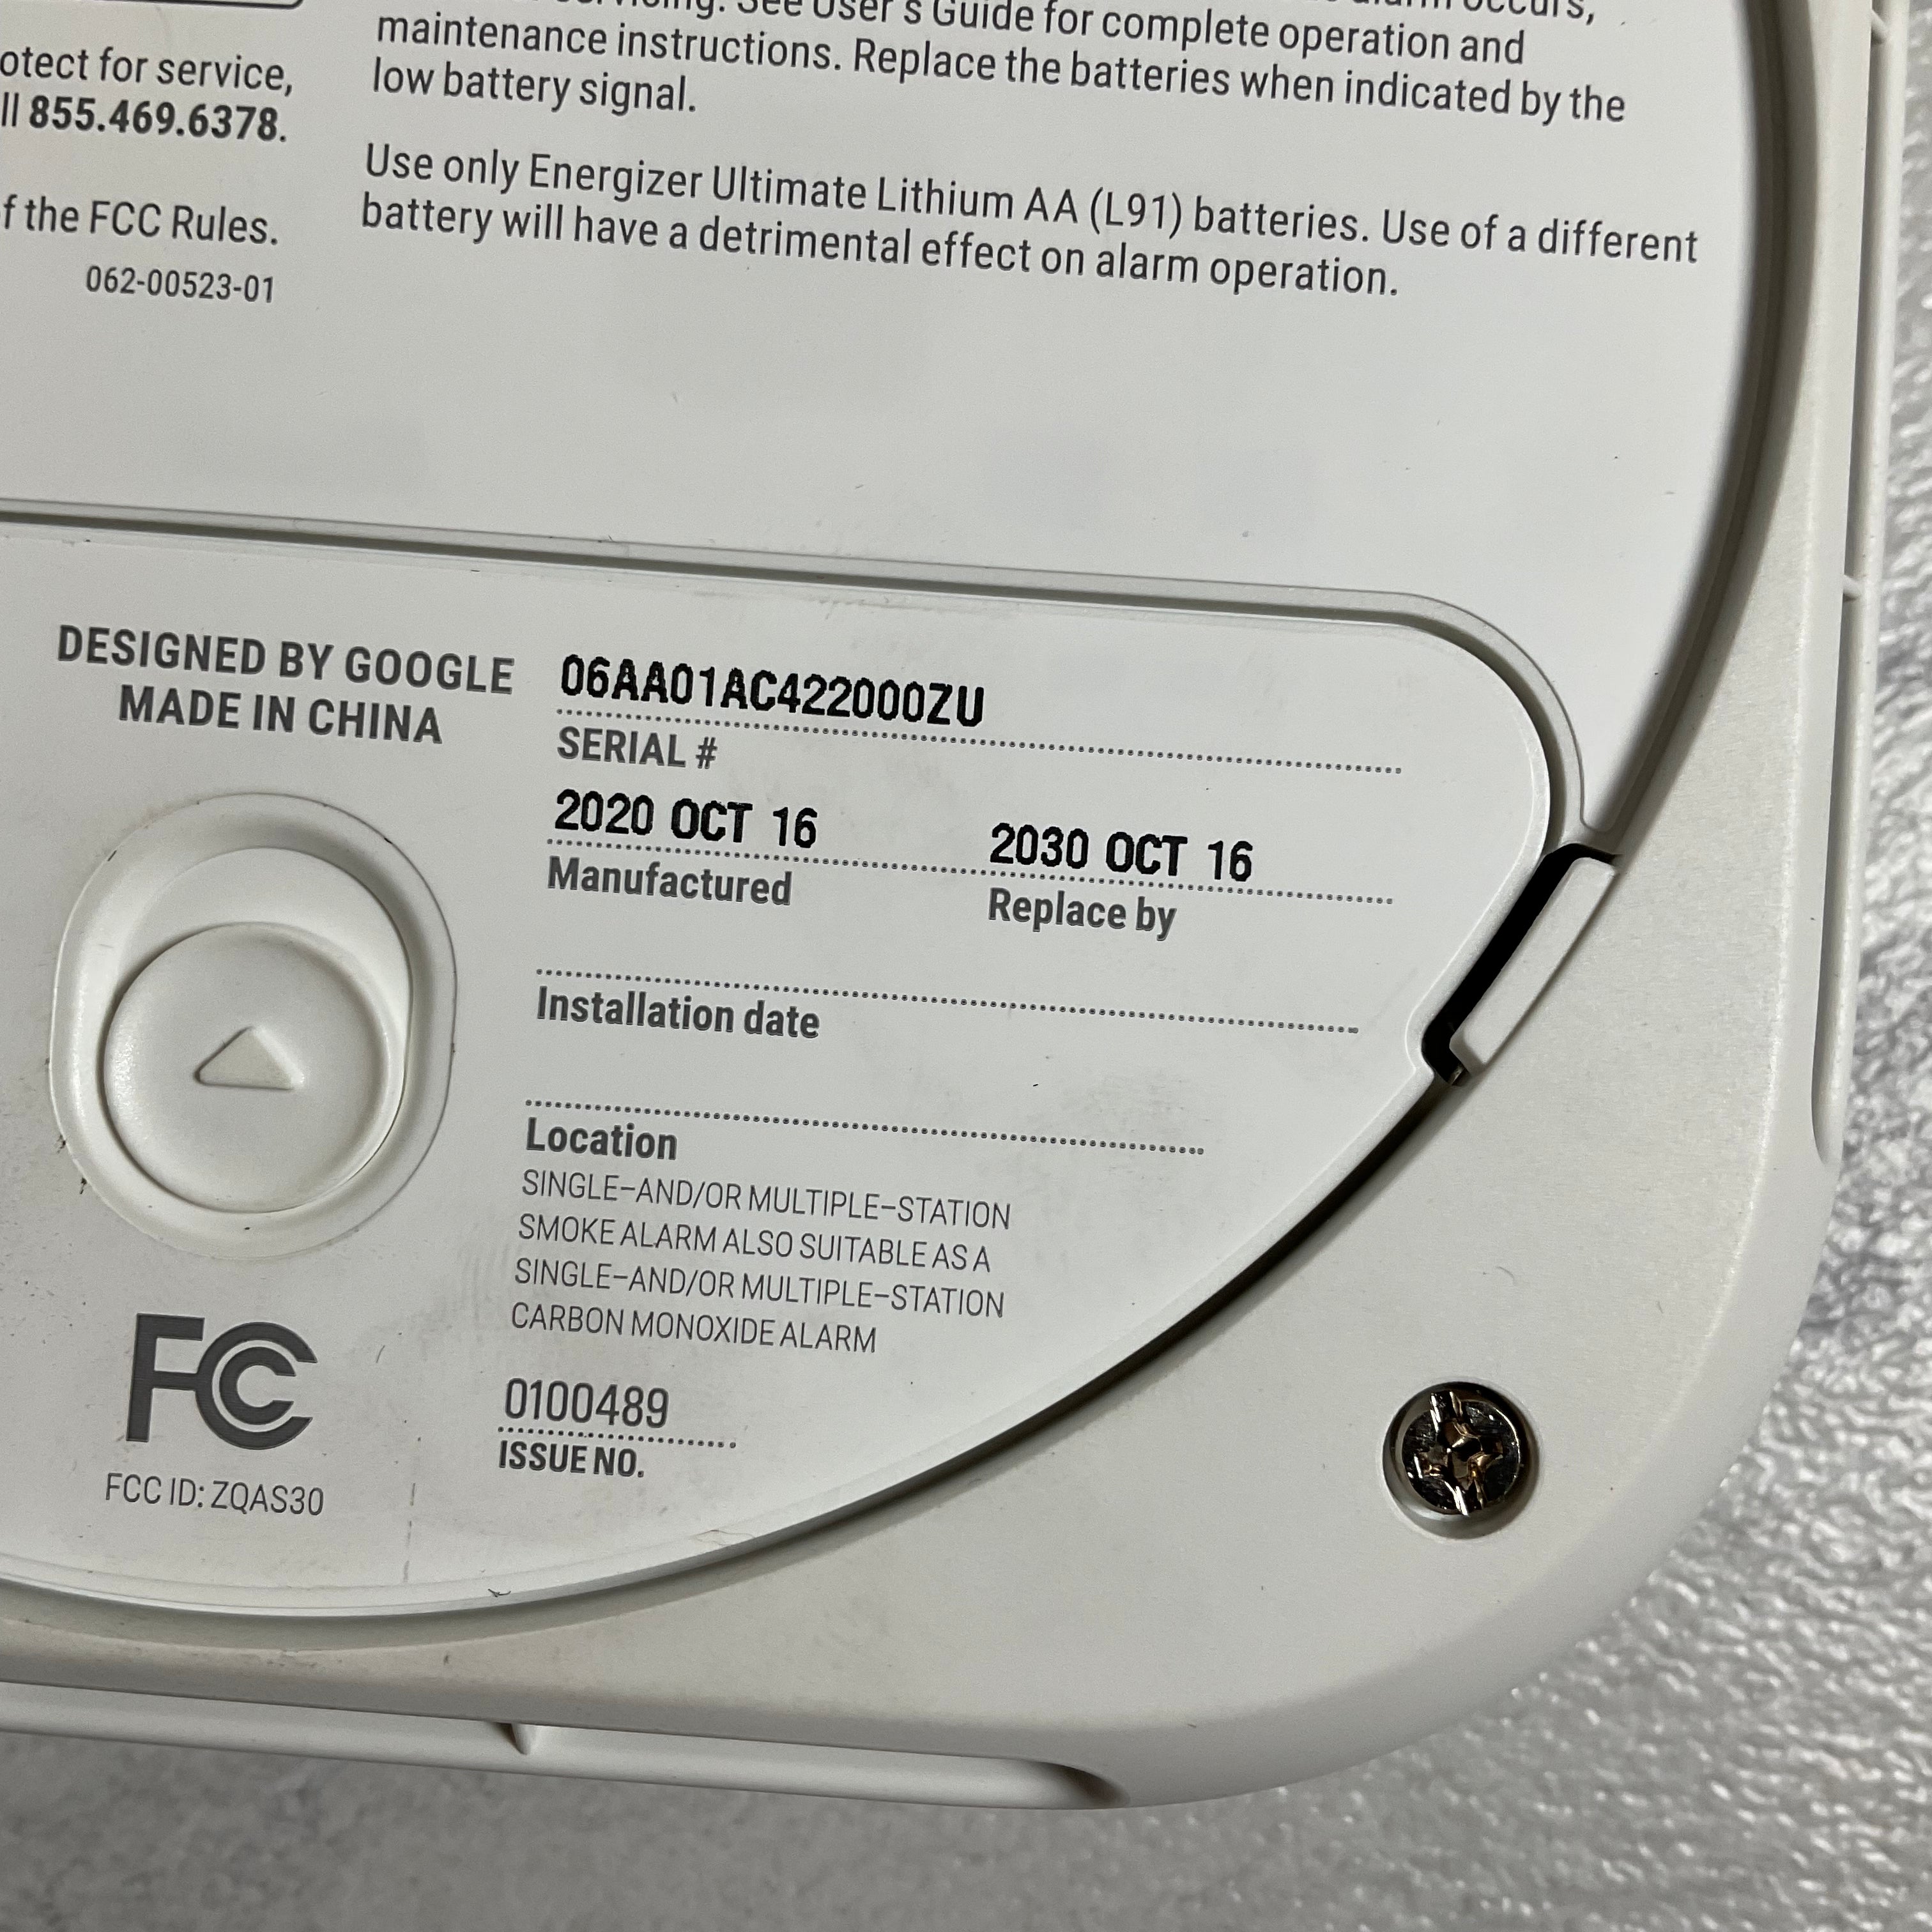 Google Nest Protect - Smoke Detector/Carbon Monoxide Detector - White (7341394919662)